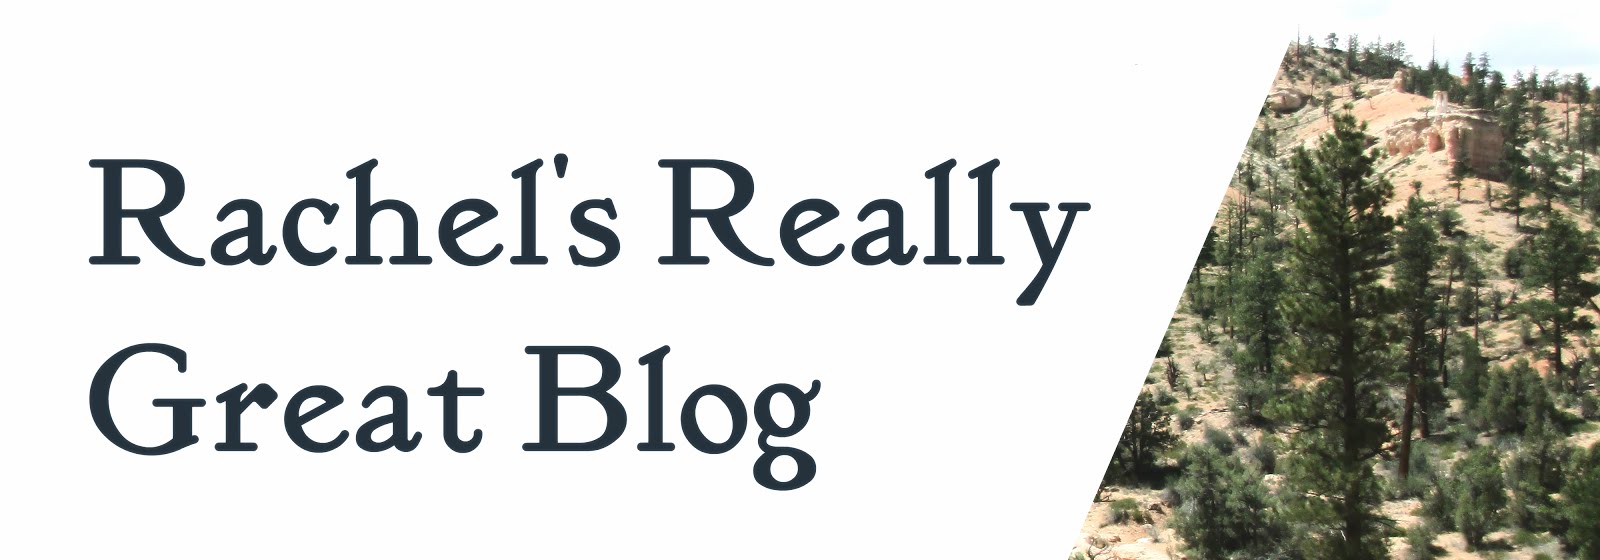 Rachel's Really Great Blog